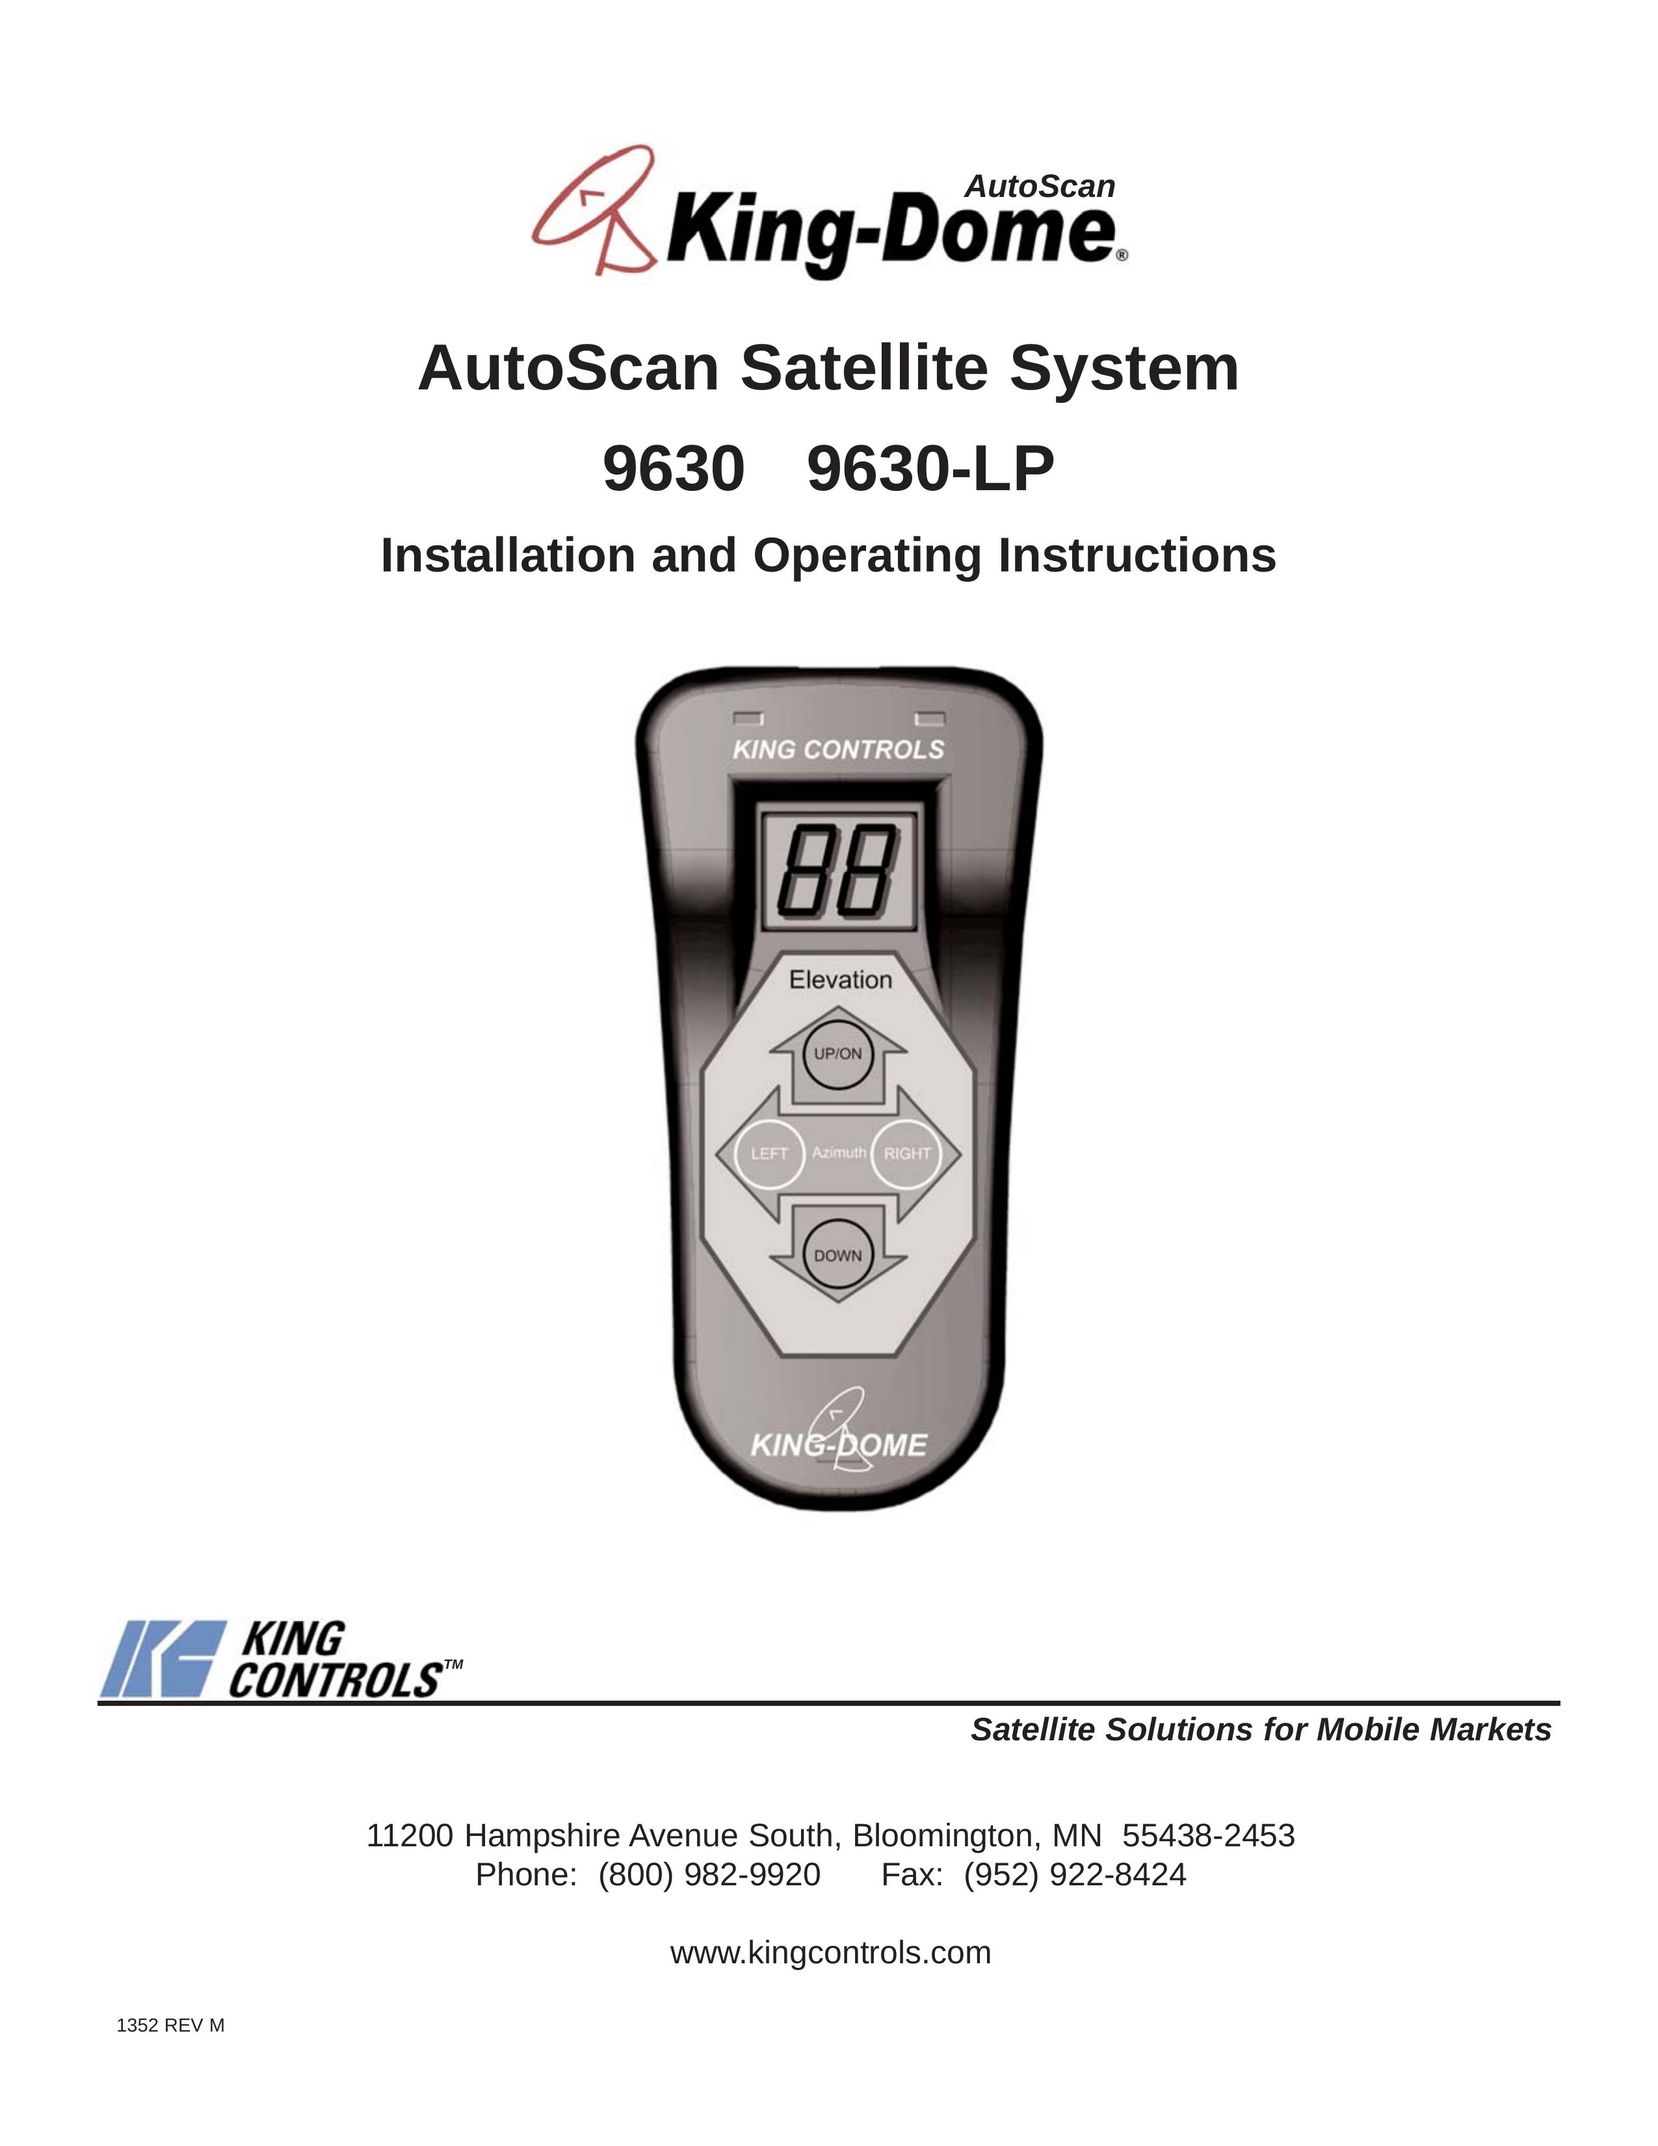 EchoStar 9630 Satellite TV System User Manual